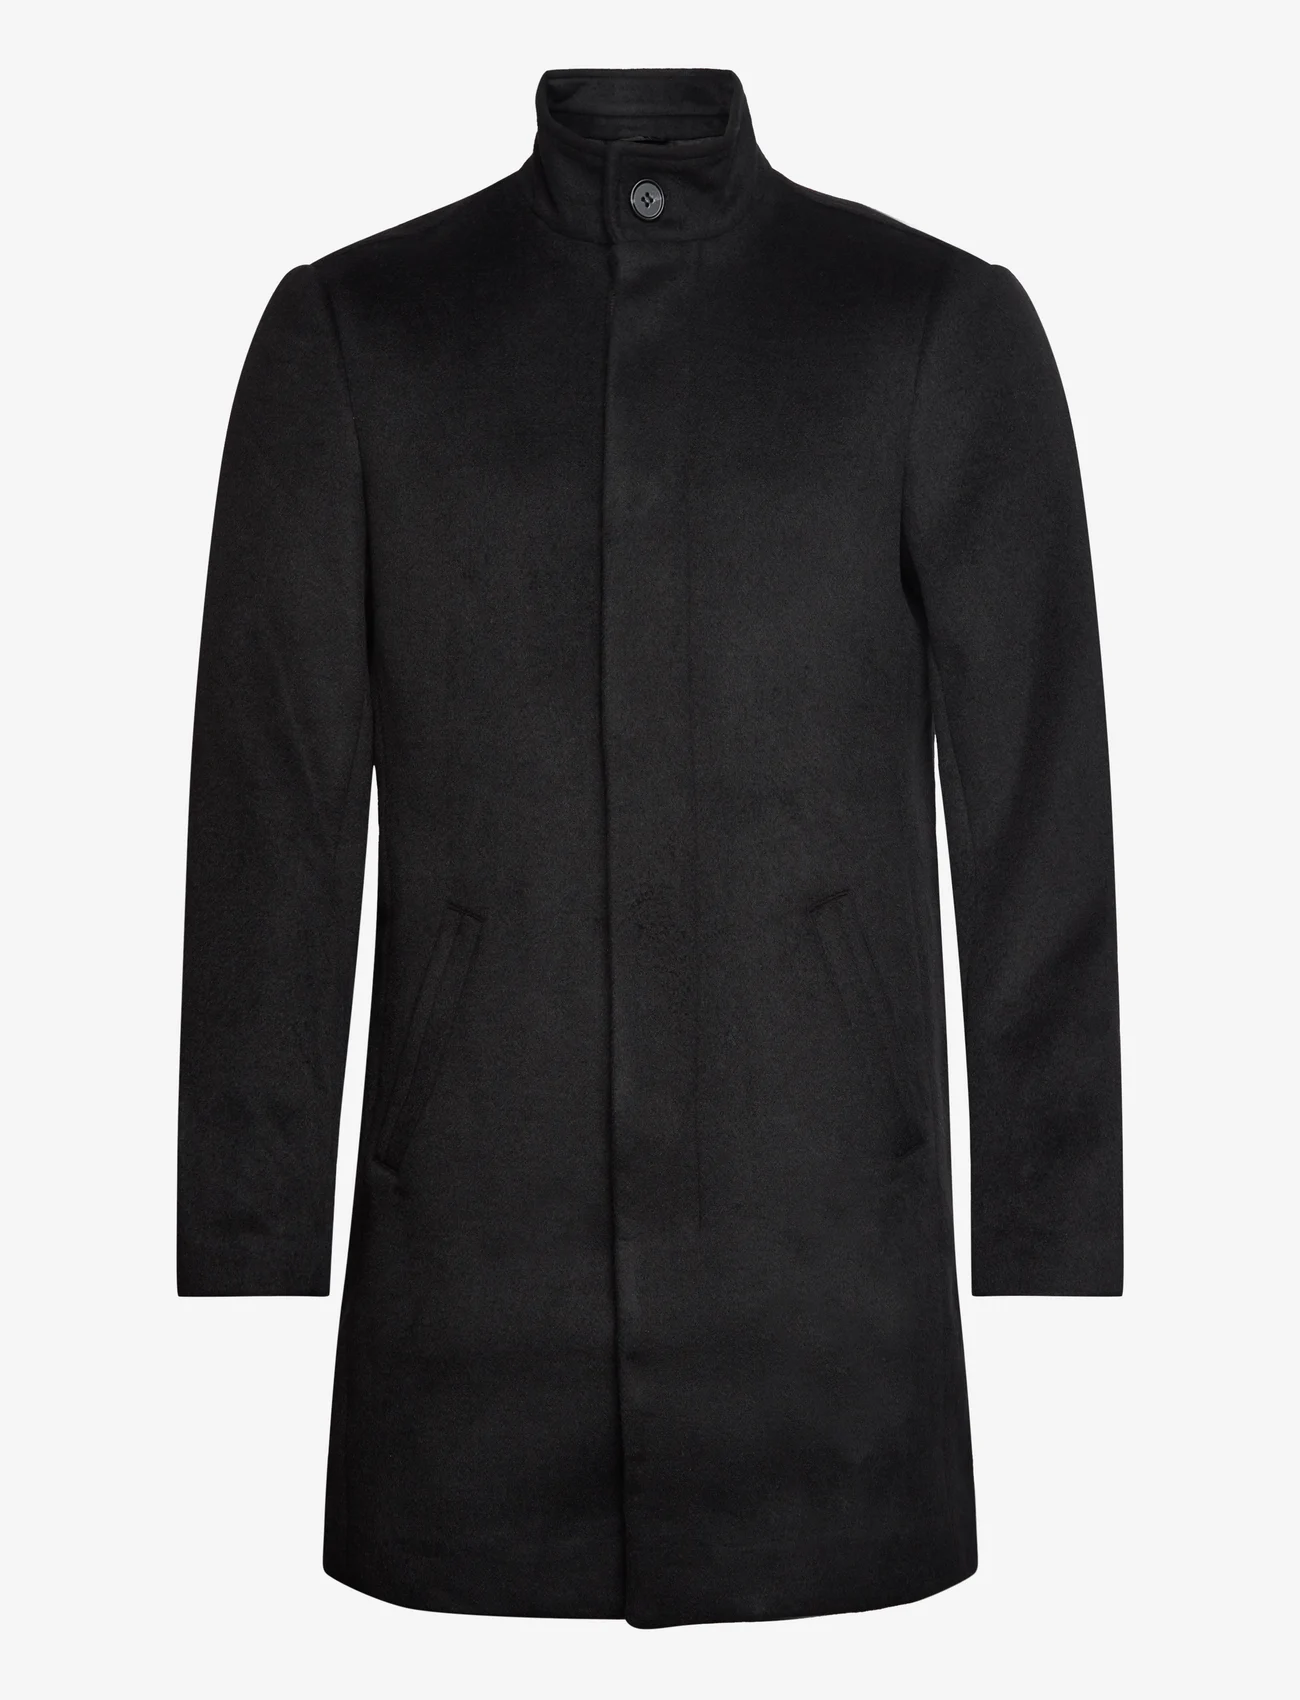 Bruuns Bazaar - KatBBAustin coat - winterjassen - black - 0